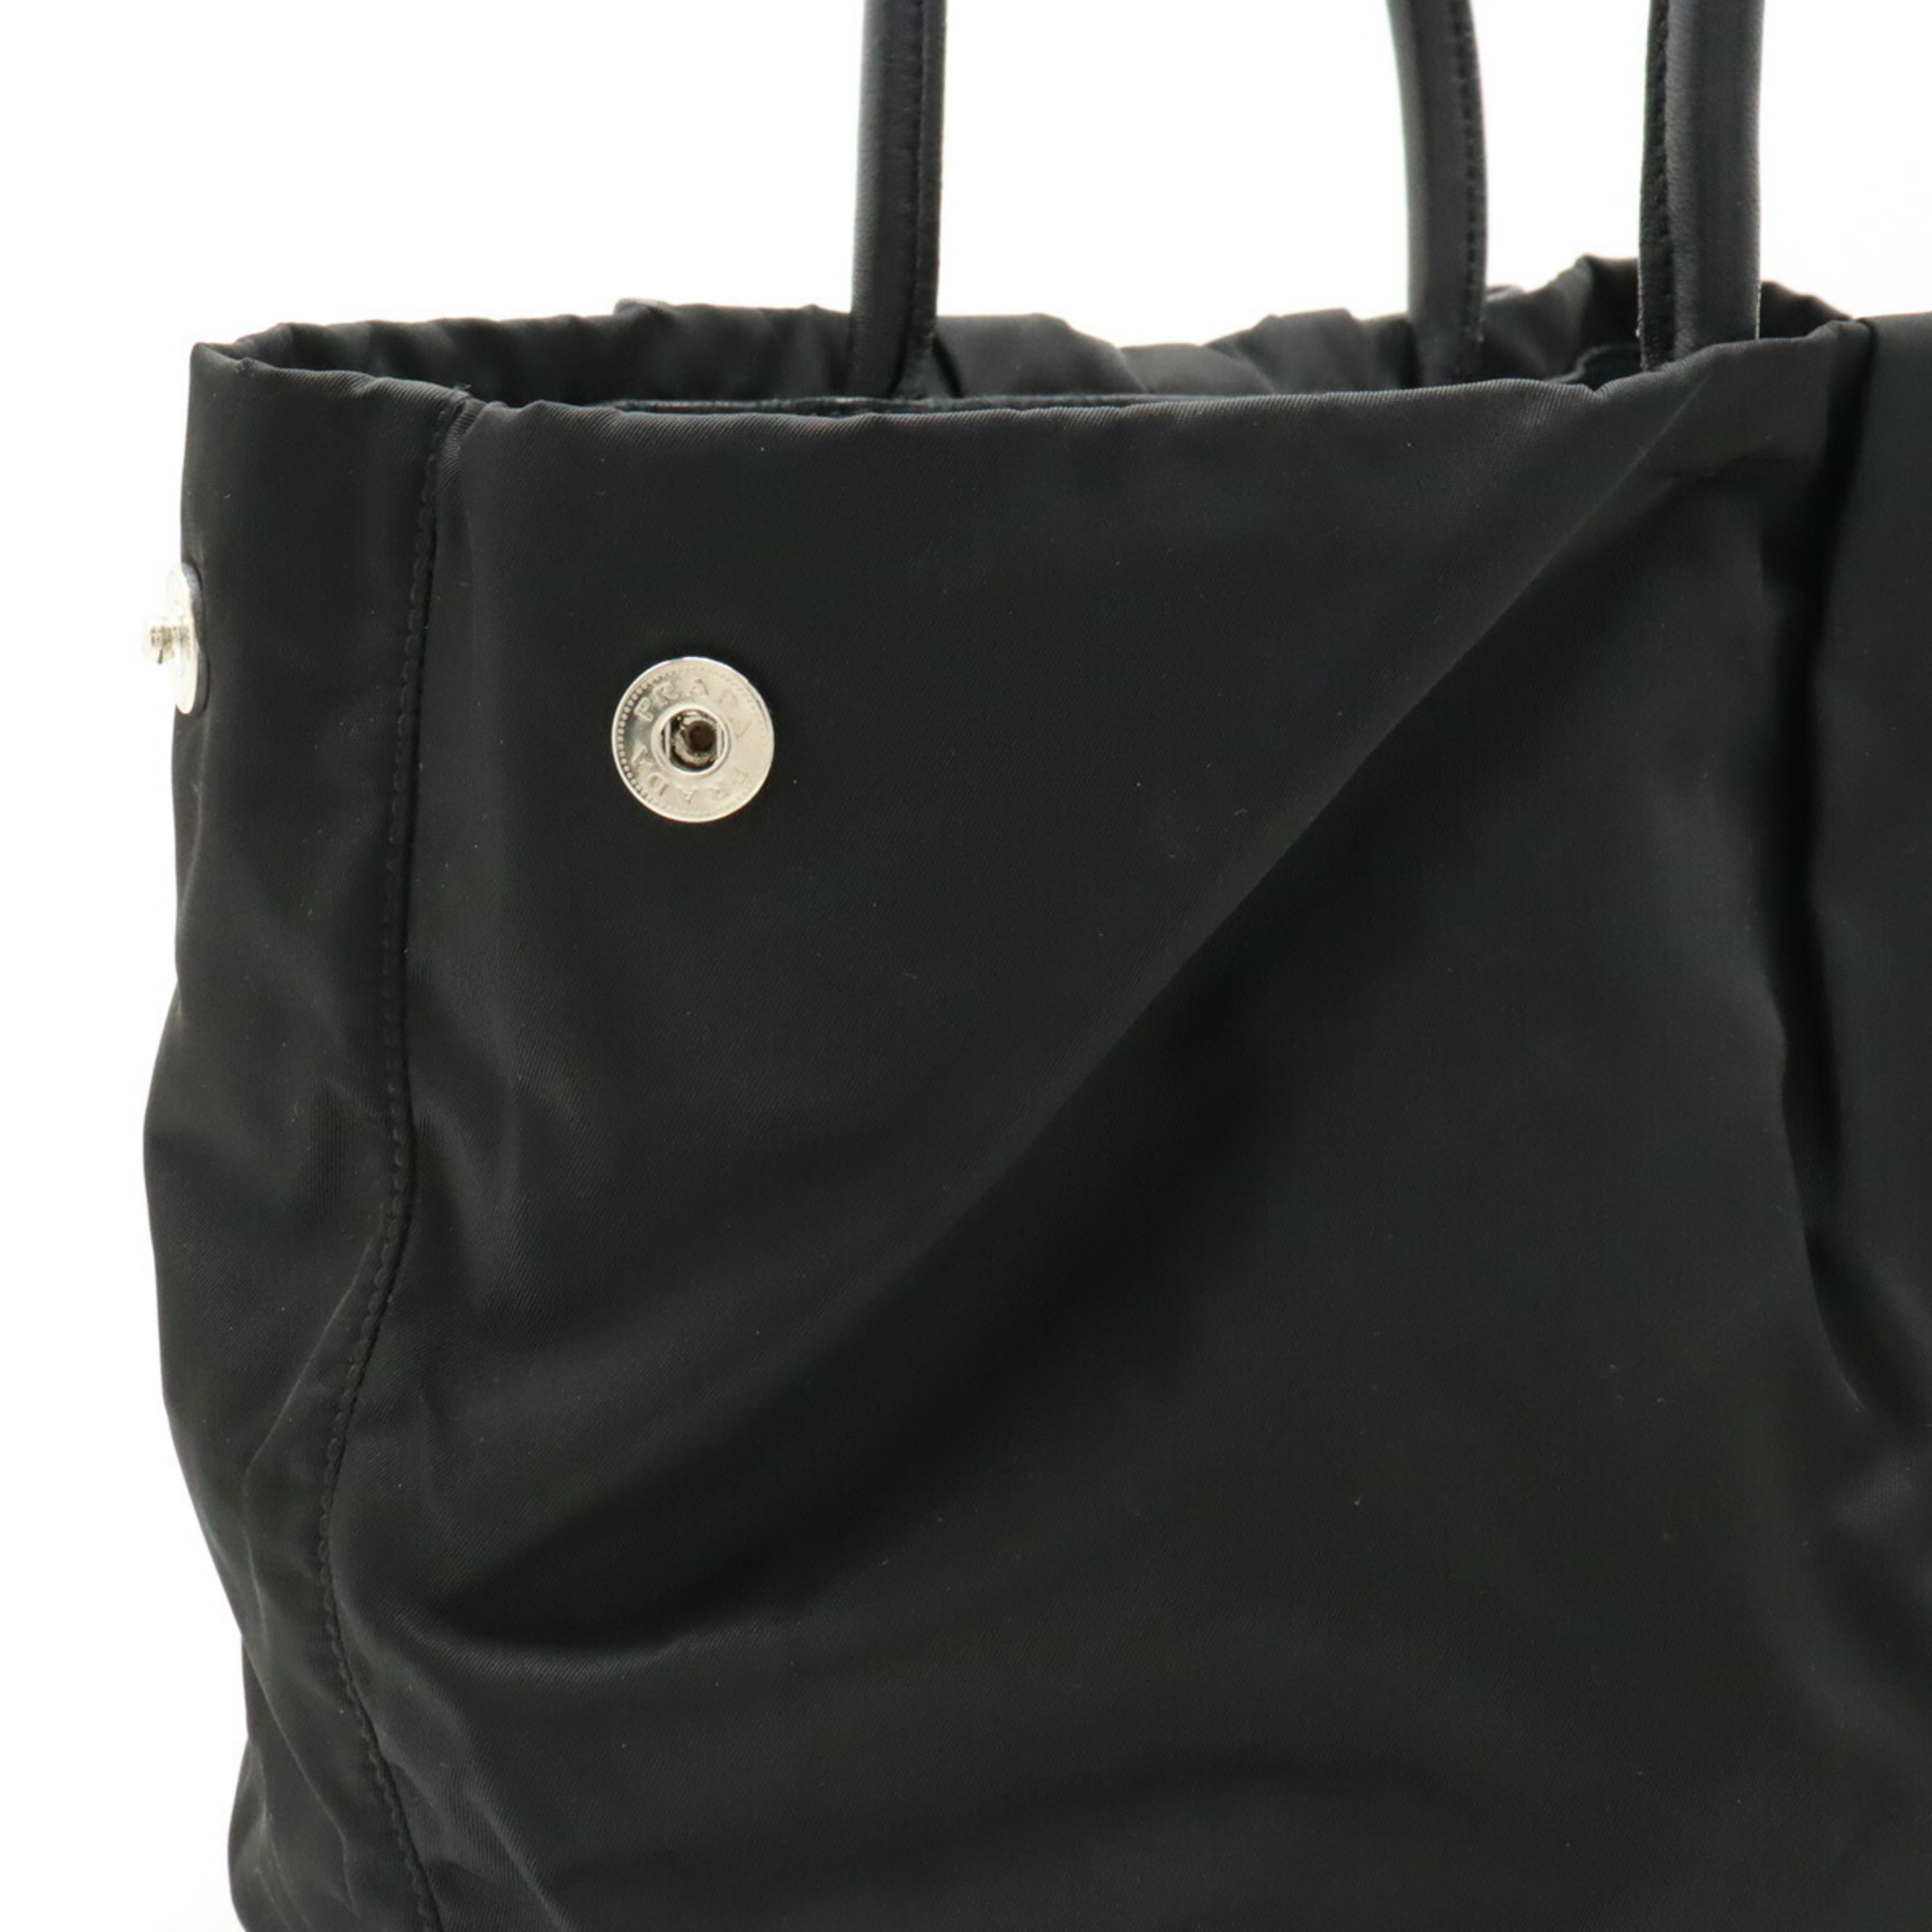 PRADA Prada Tote Bag Handbag Ribbon Nylon Nappa Leather NERO Black Purchased at a domestic boutique BN1601